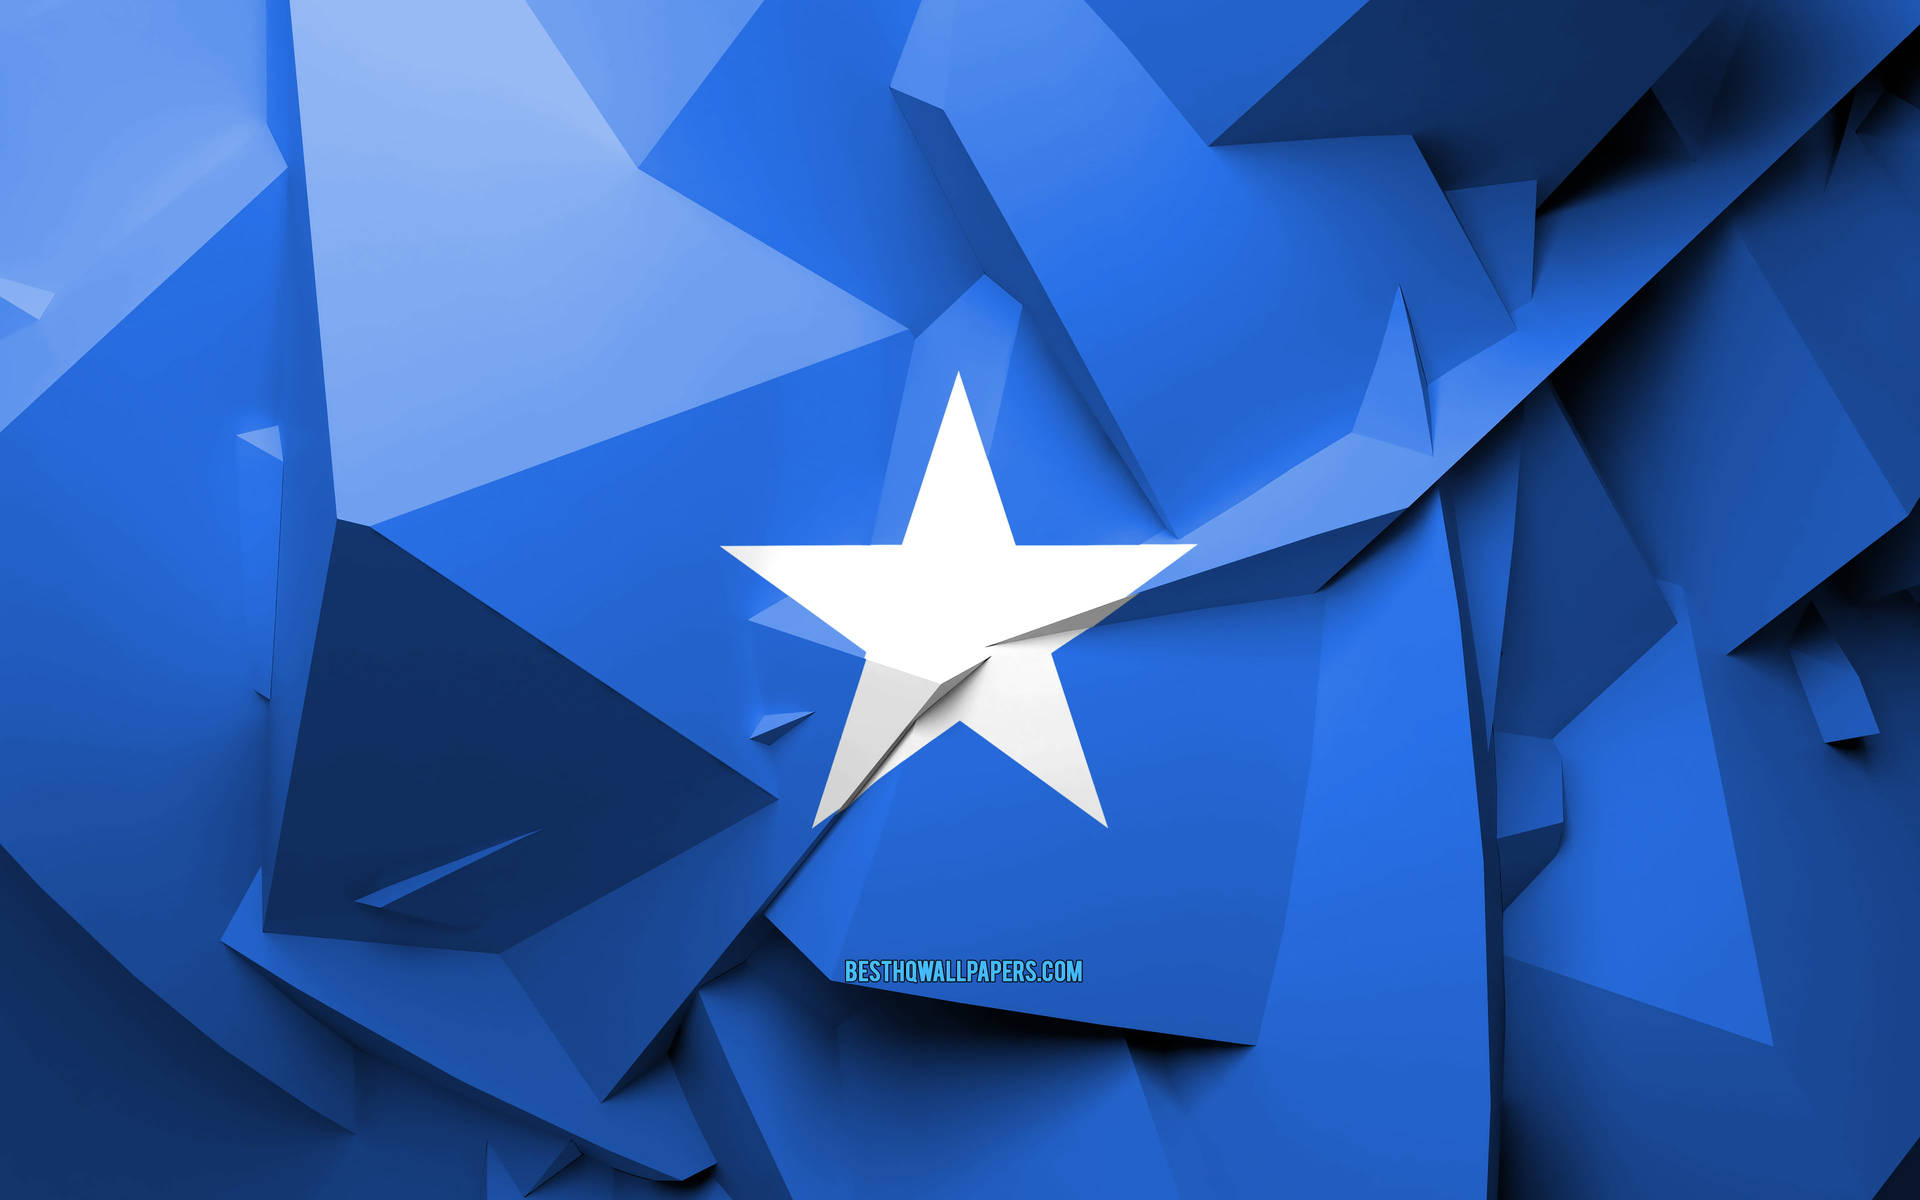 Banderade Somalia Geométrica Irregular Fondo de pantalla